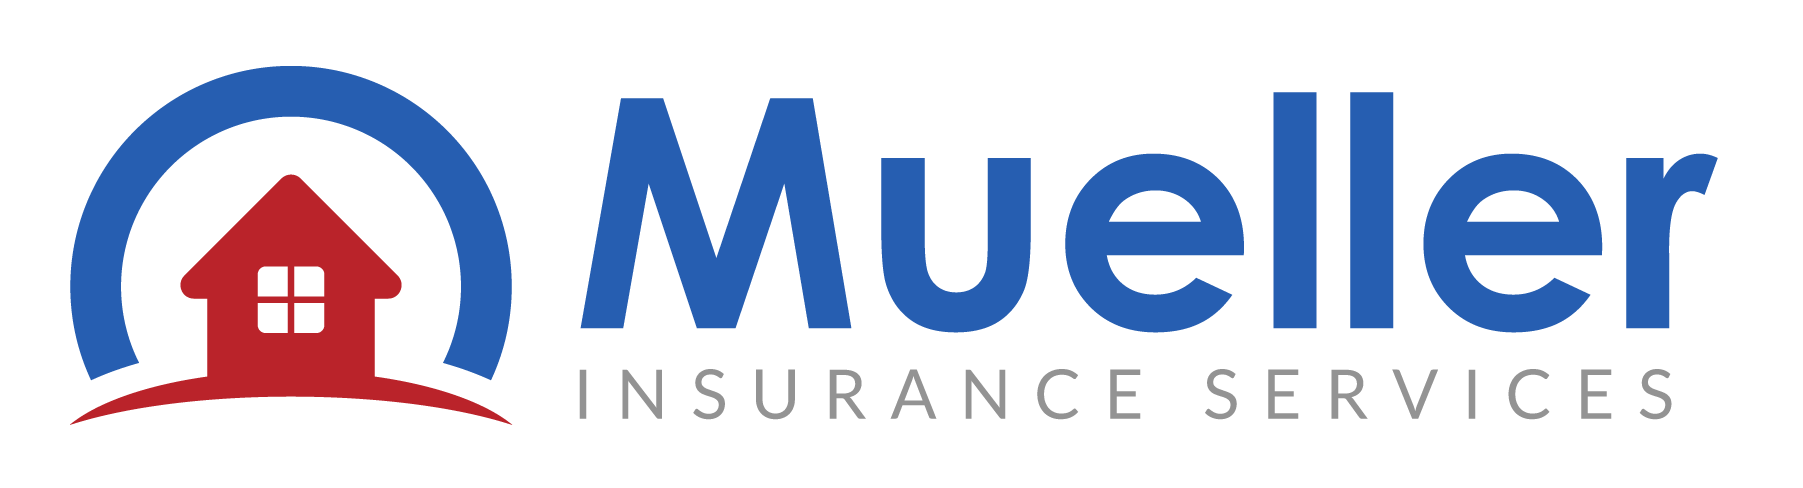 mueller insurance services